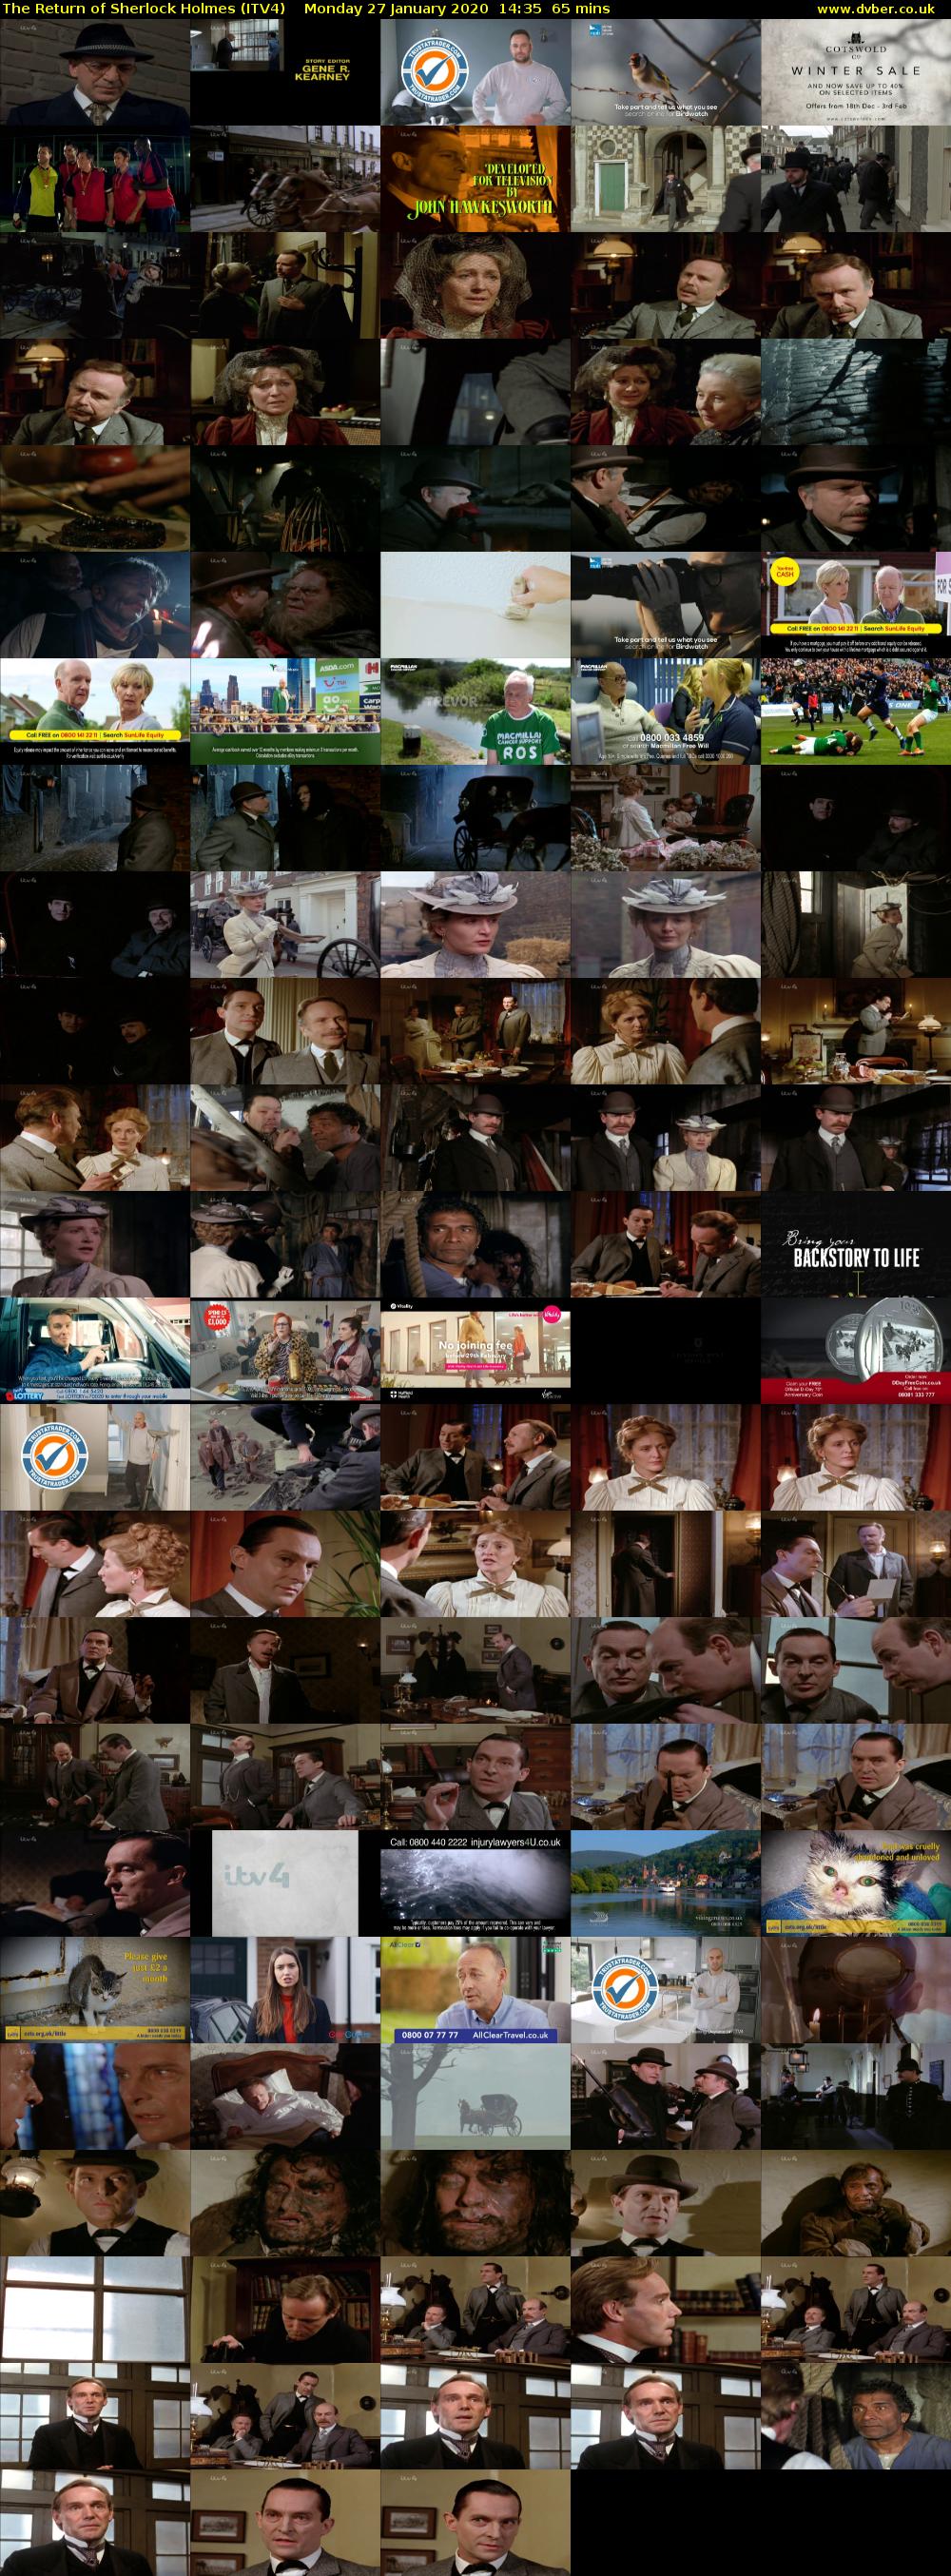 The Return of Sherlock Holmes (ITV4) Monday 27 January 2020 14:35 - 15:40